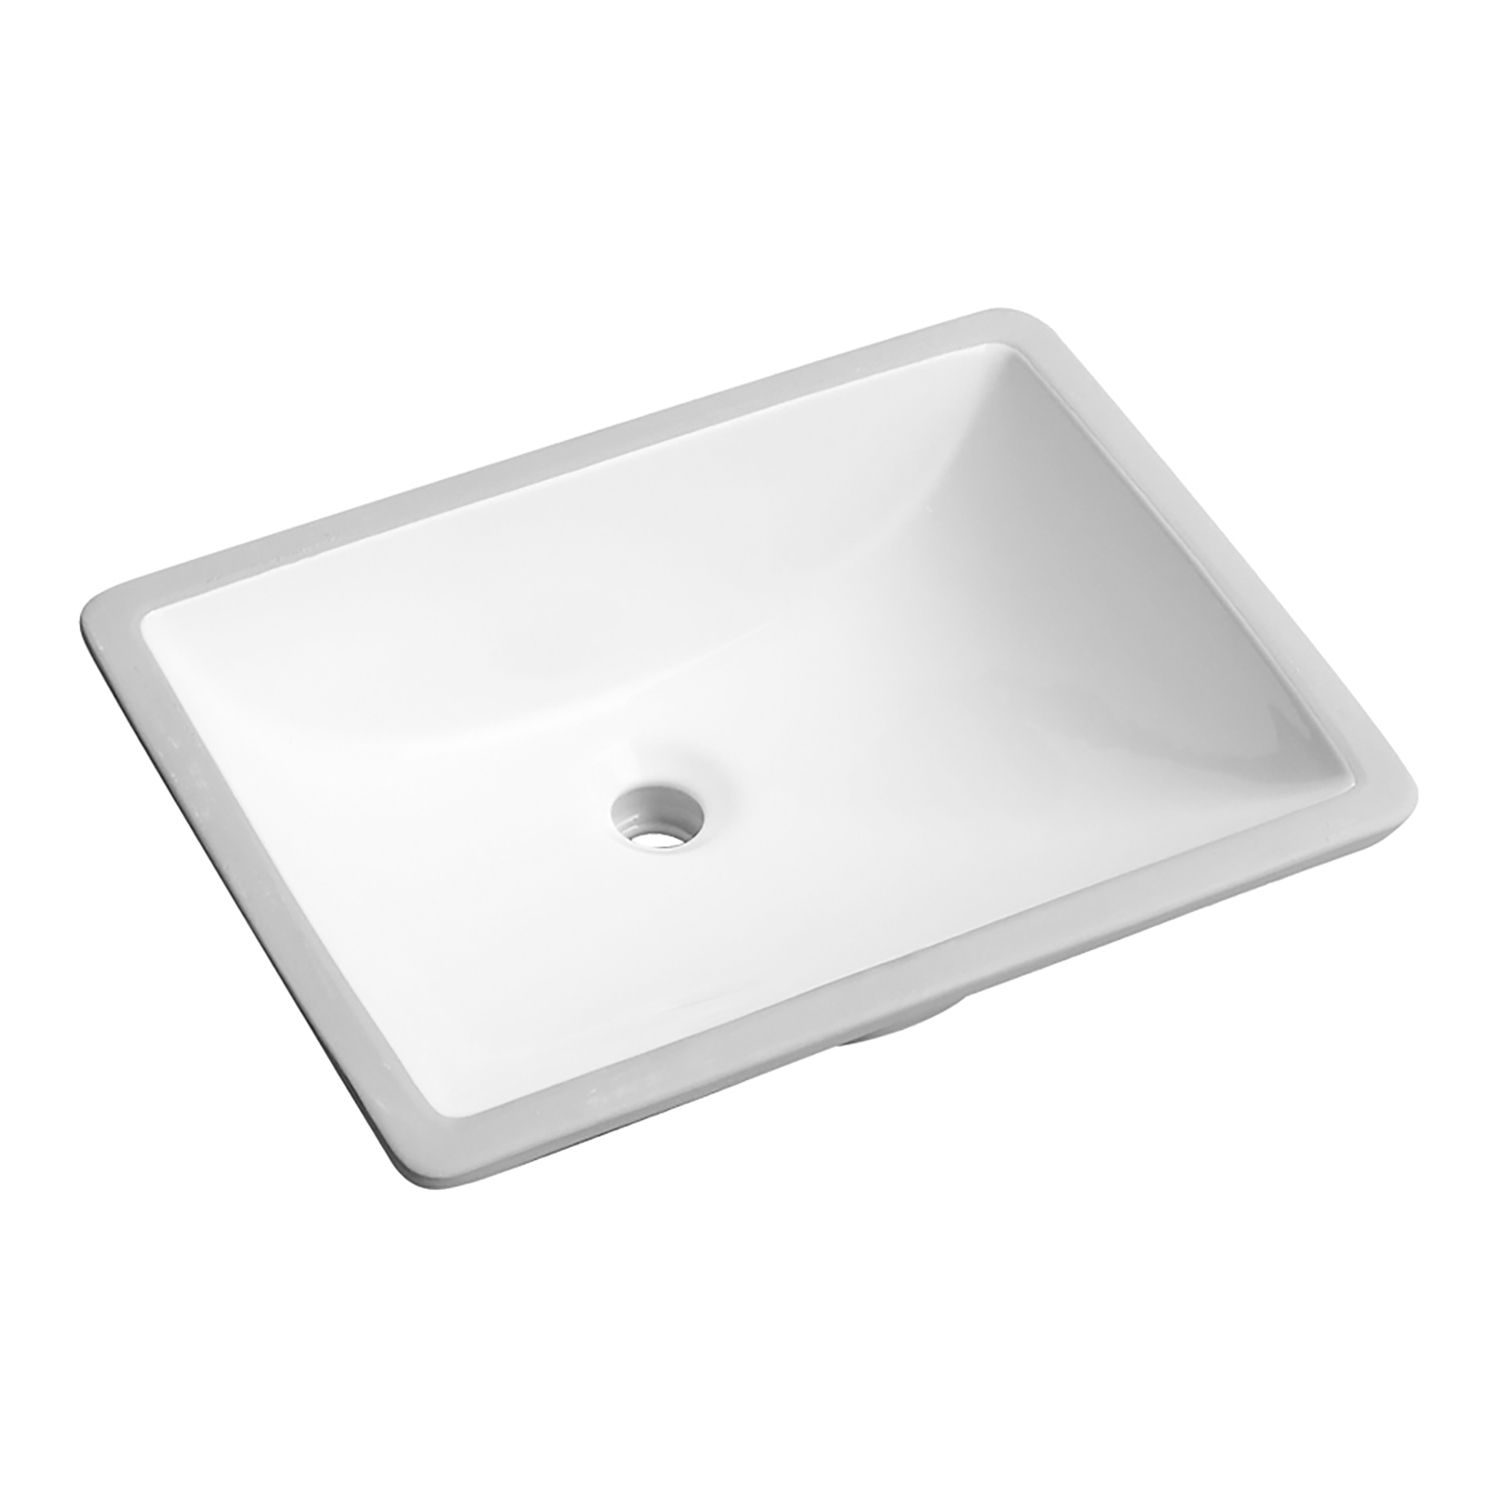 Duko C2020 20" x 15" White Square Ceramic Undermount Bathroom Vanity Vessel Sink